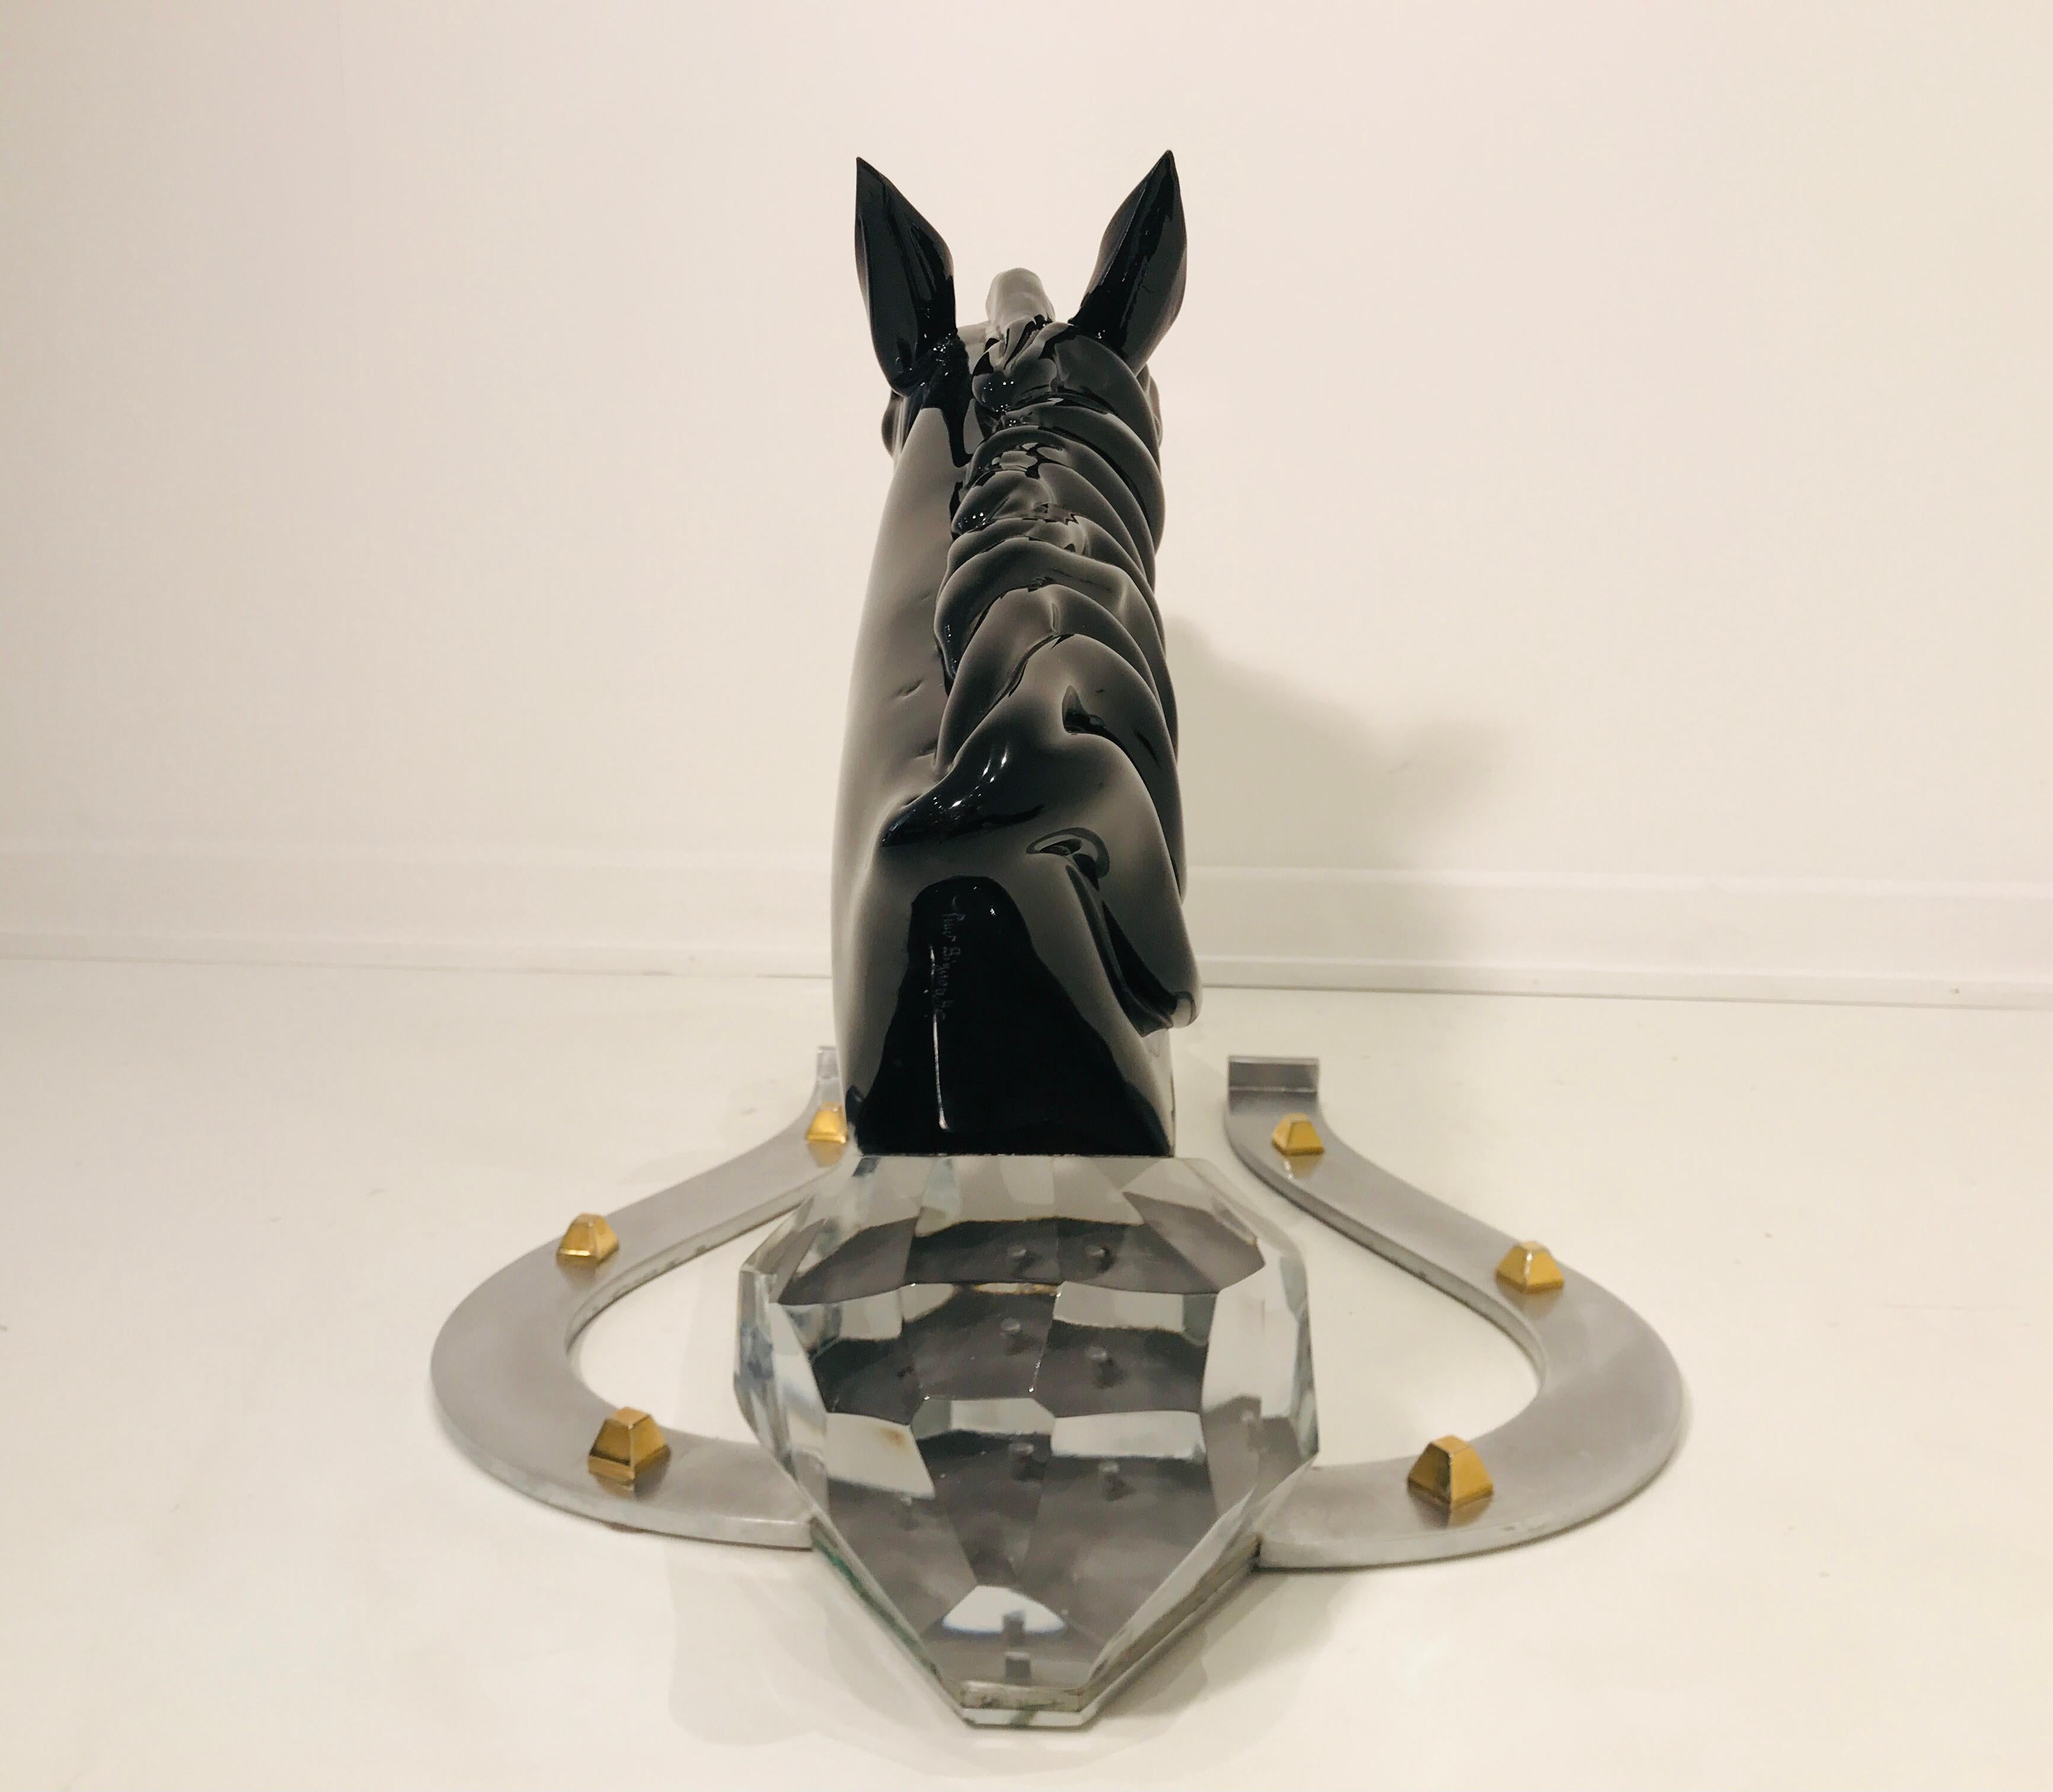 Italian Sculptural Horse in Glass by Pino Signoretto